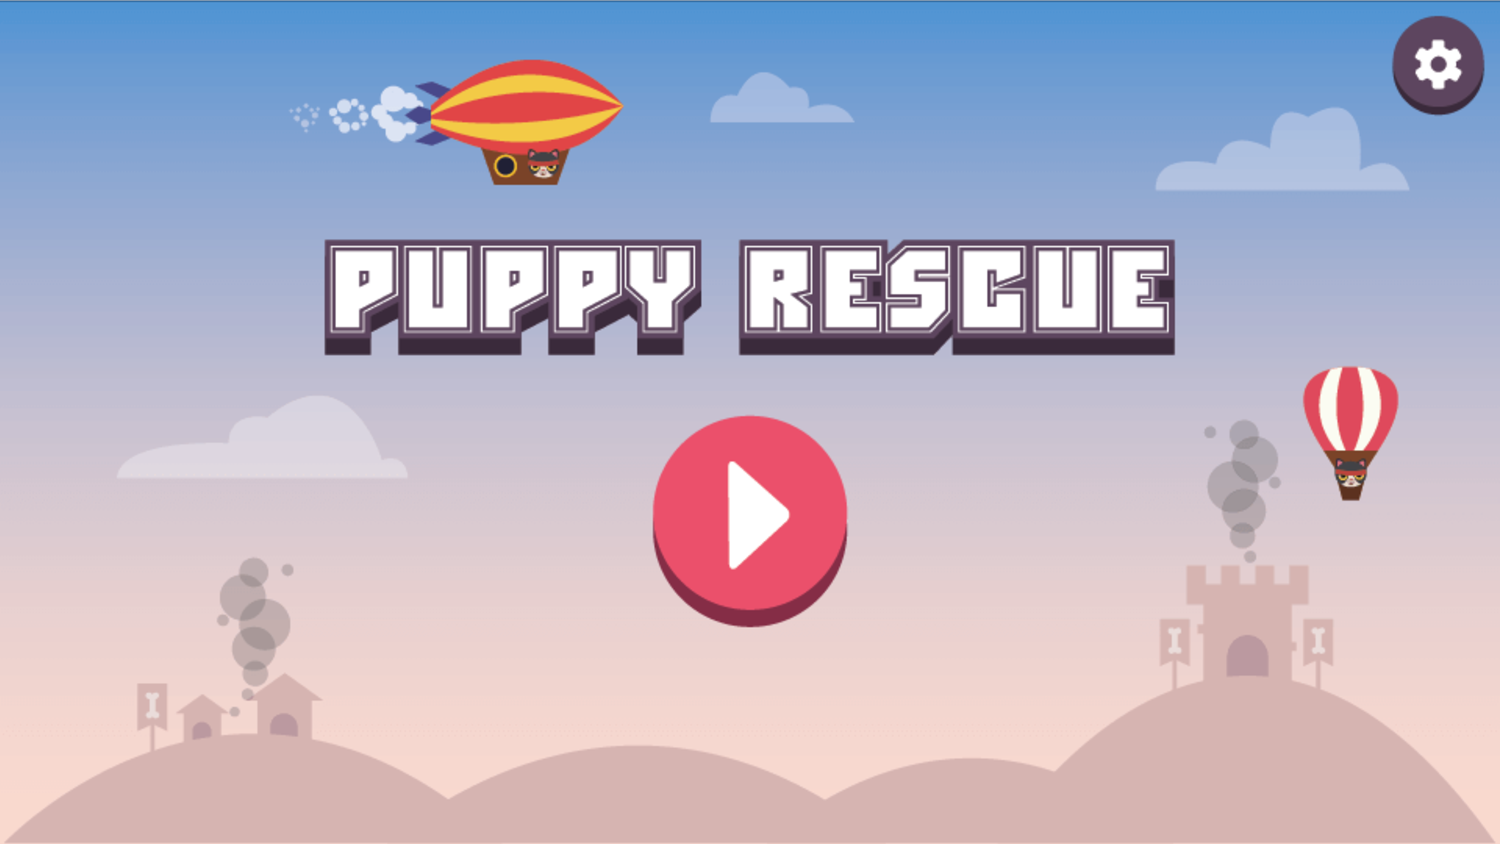 Puppy Rescue Game Welcome Screen Screenshot.